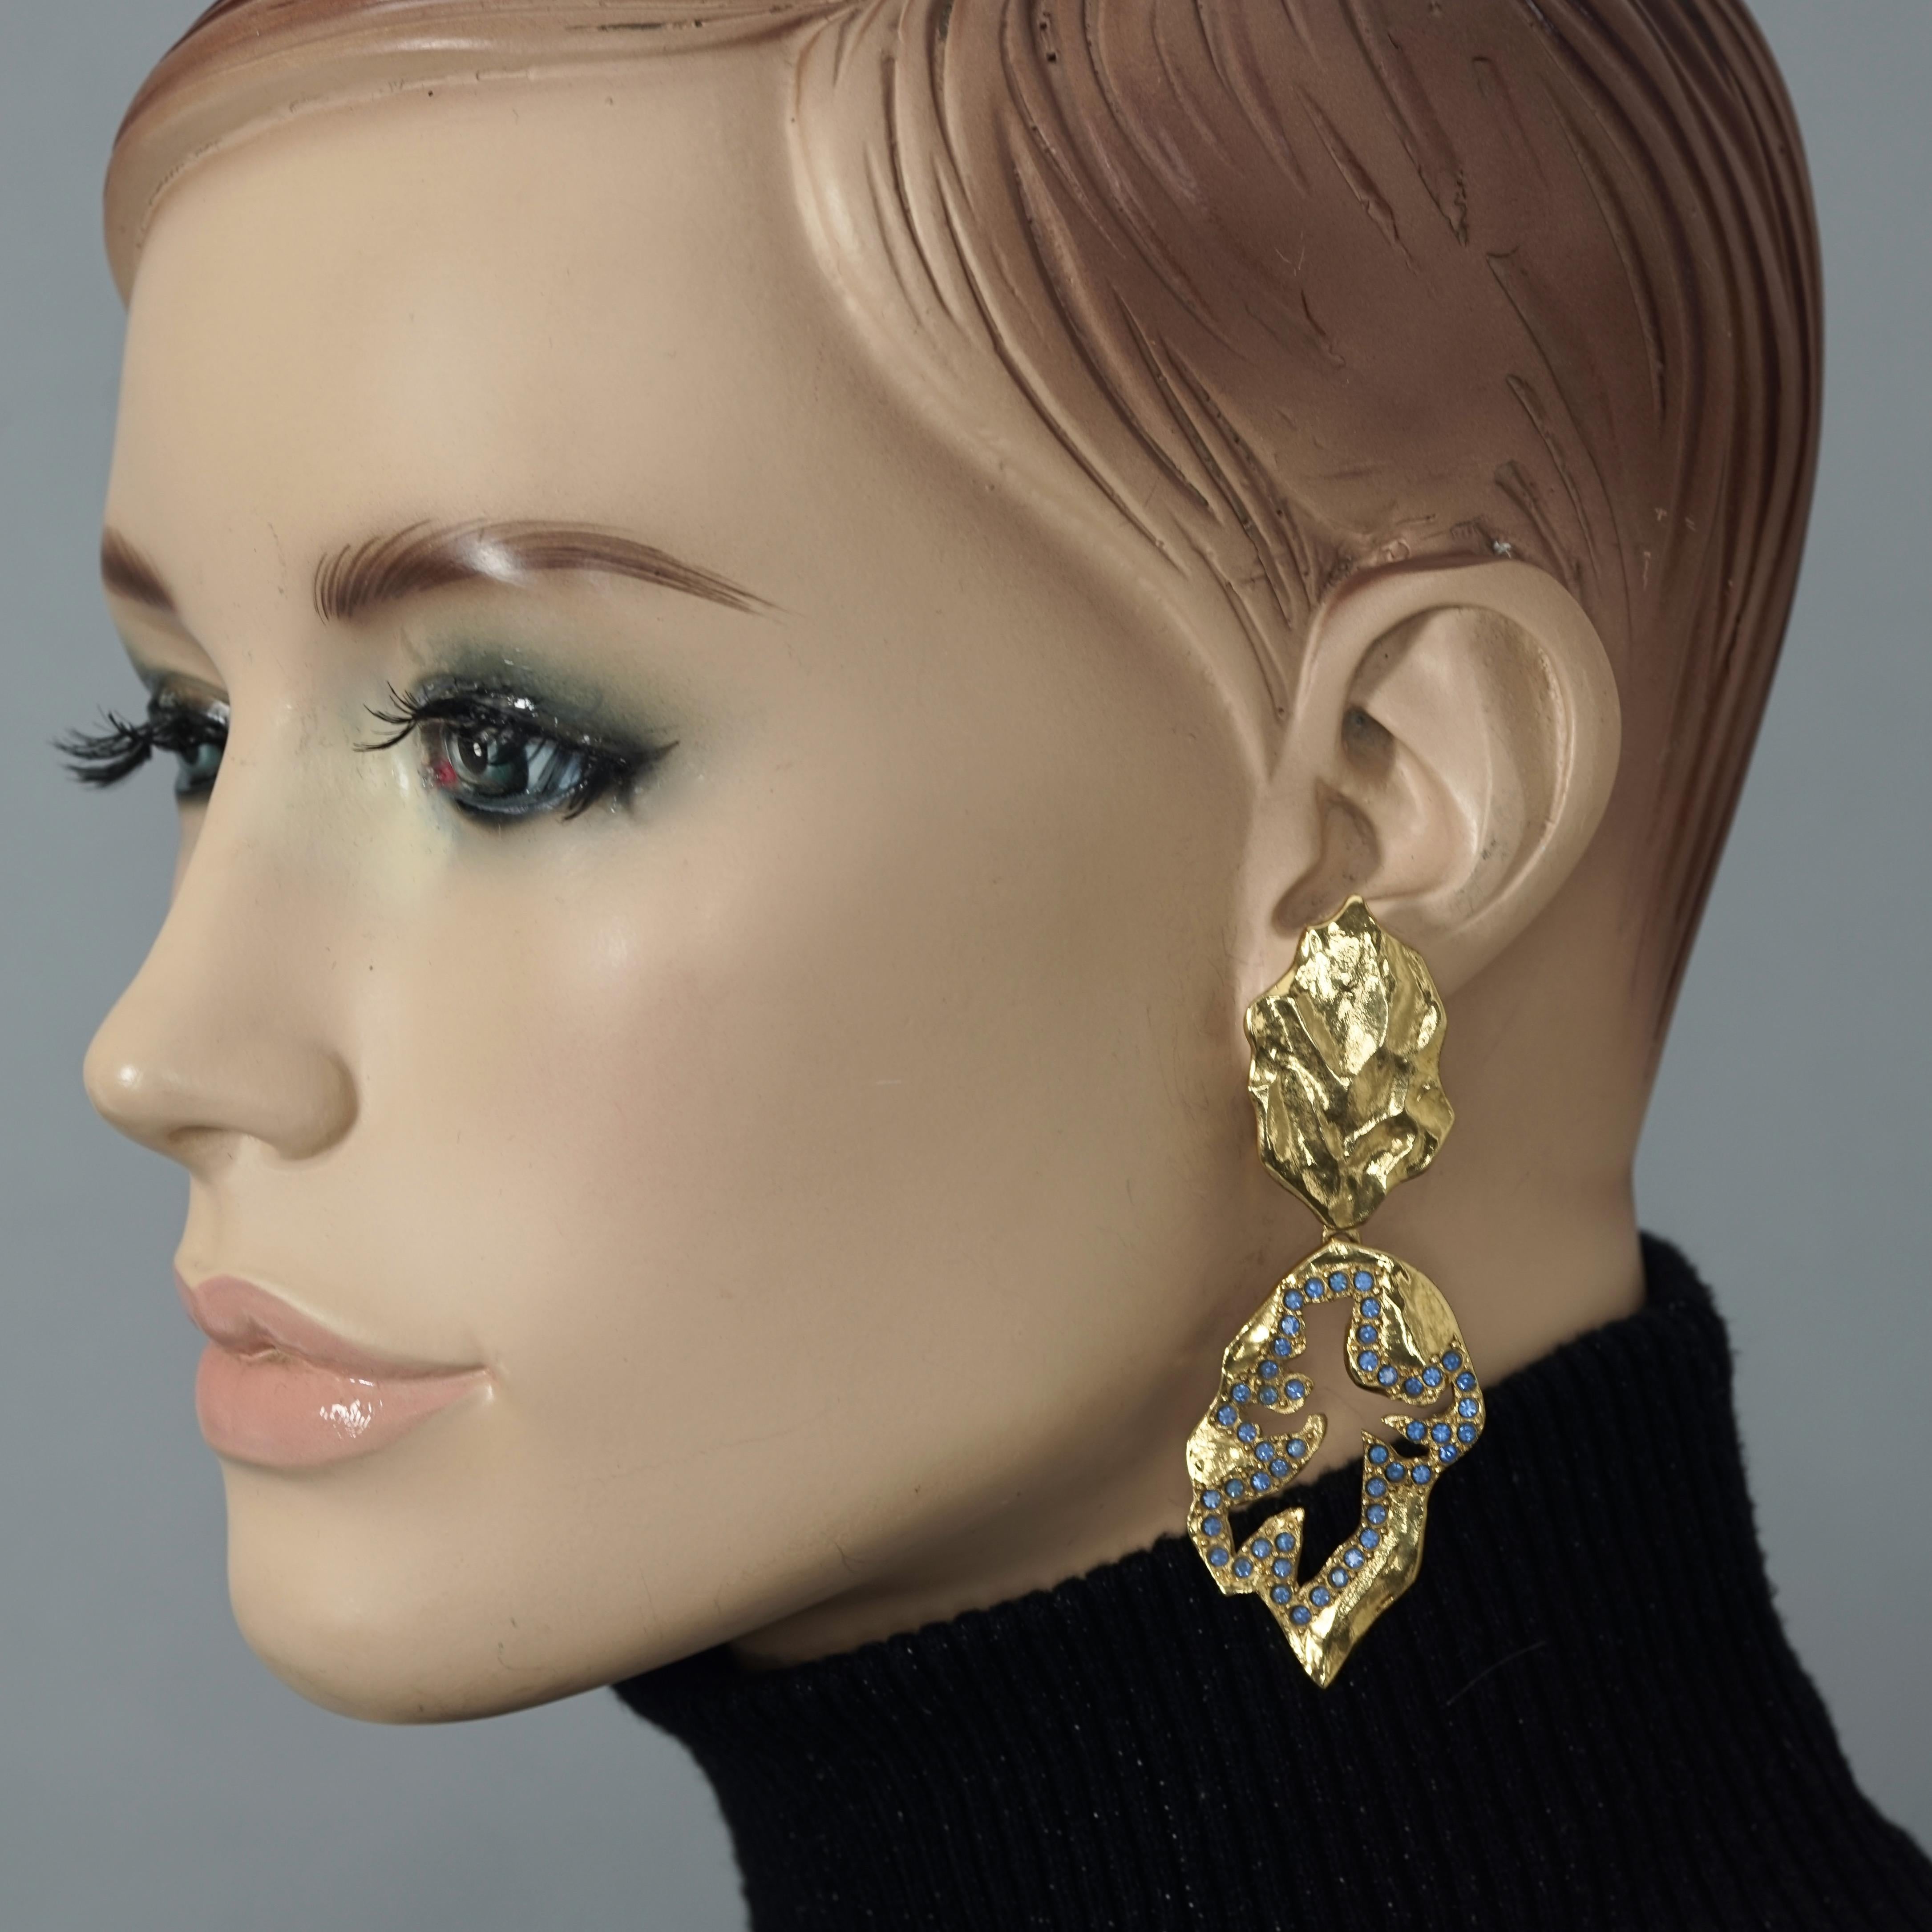 Vintage YVES SAINT LAURENT Ysl  Jeweled Openwork Leaf Dangling Earrings

Measurements:
Height: 3.07 inches (7.8 cm)
Width: 1.10 inches (2.8 cm)
Weight per Earring: 16 grams

Features:
- 100% Authentic YVES SAINT LAURENT.
- Openwork dangling earrings